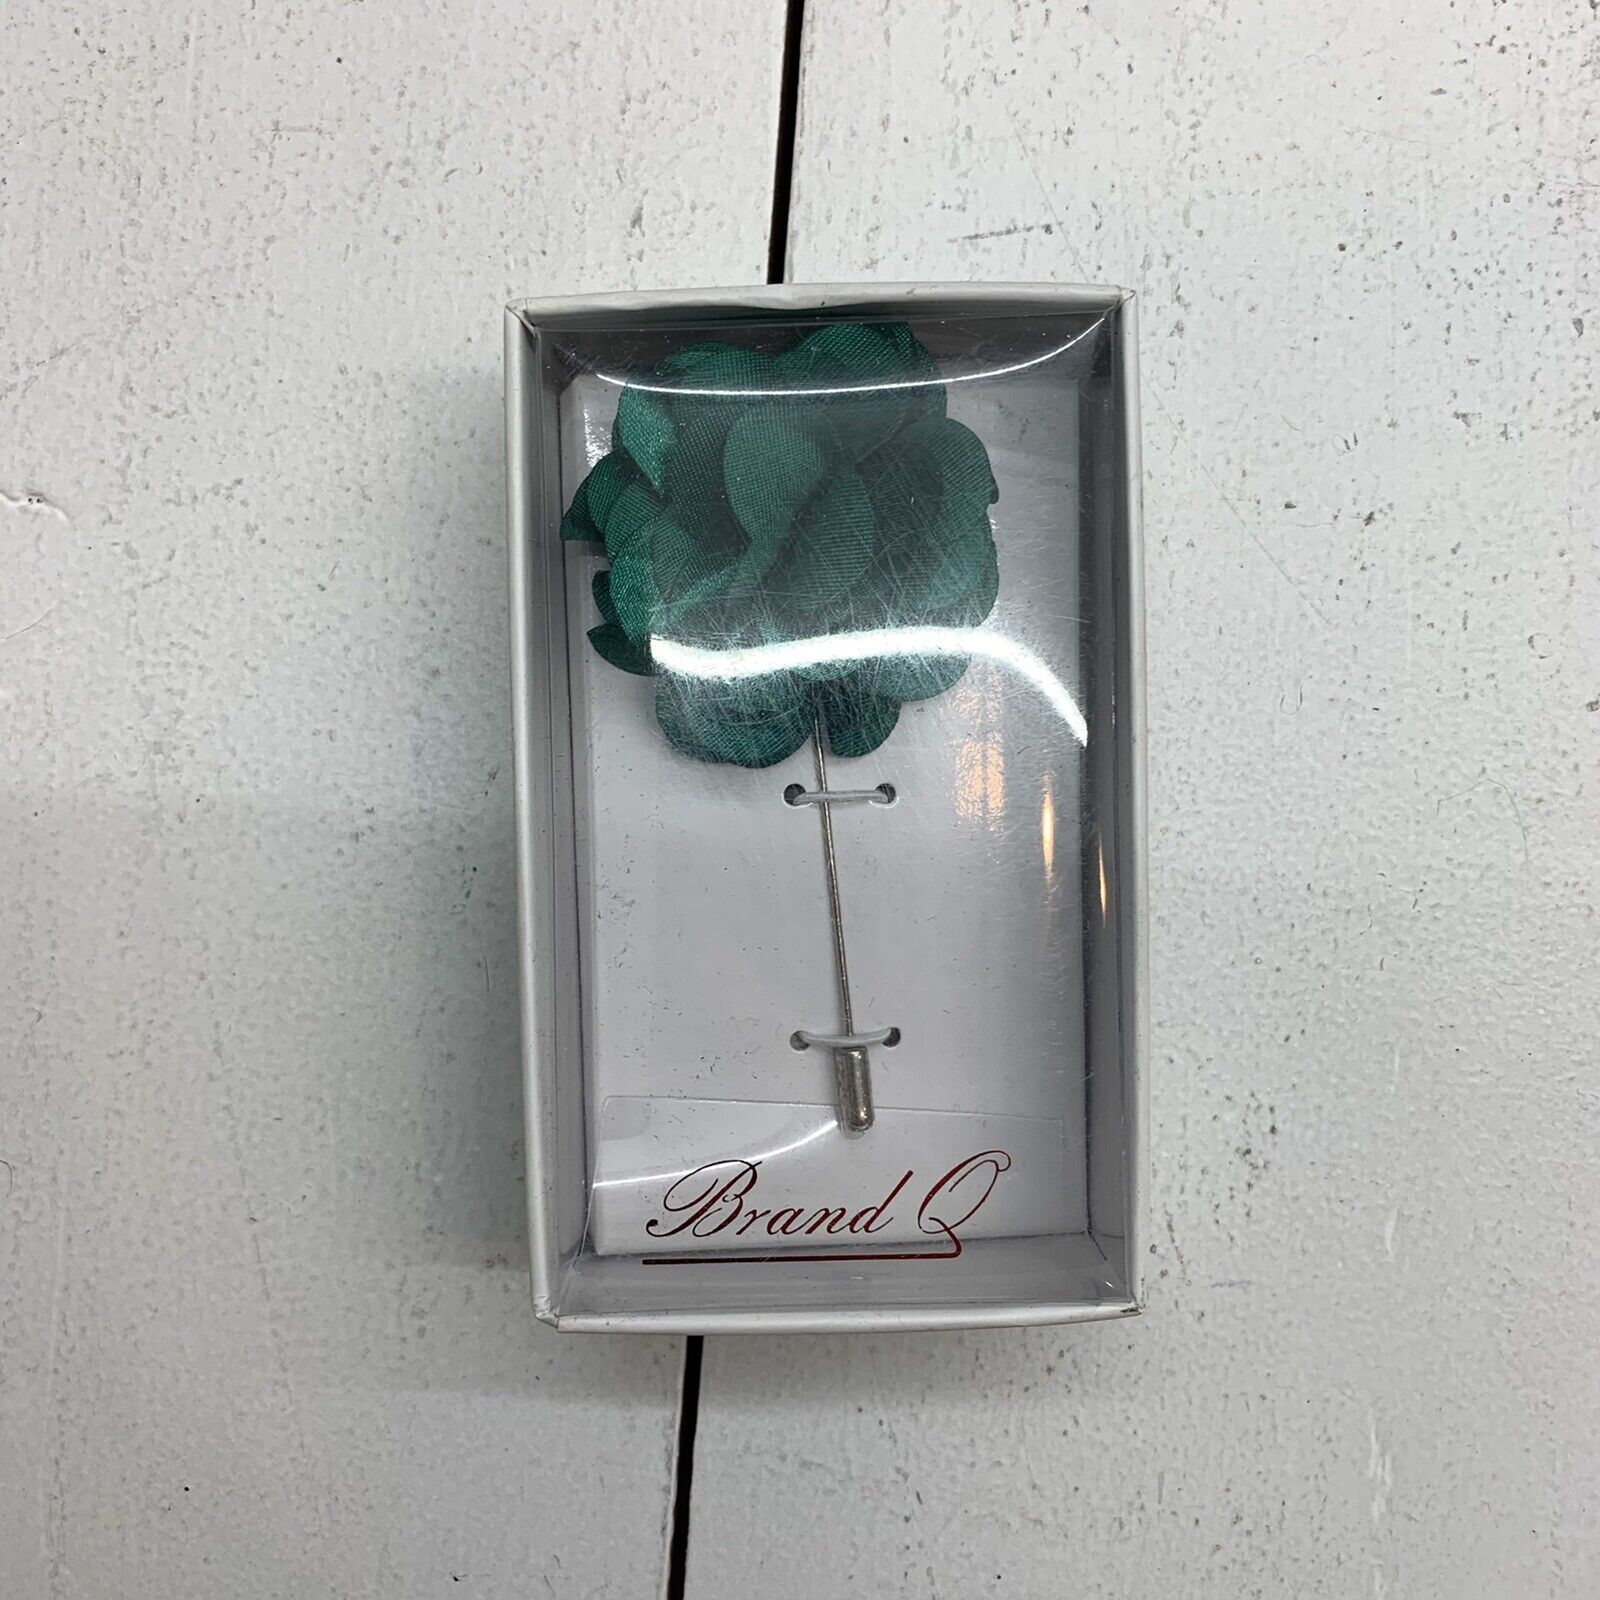 Brand Q Emerald Green Label Pin